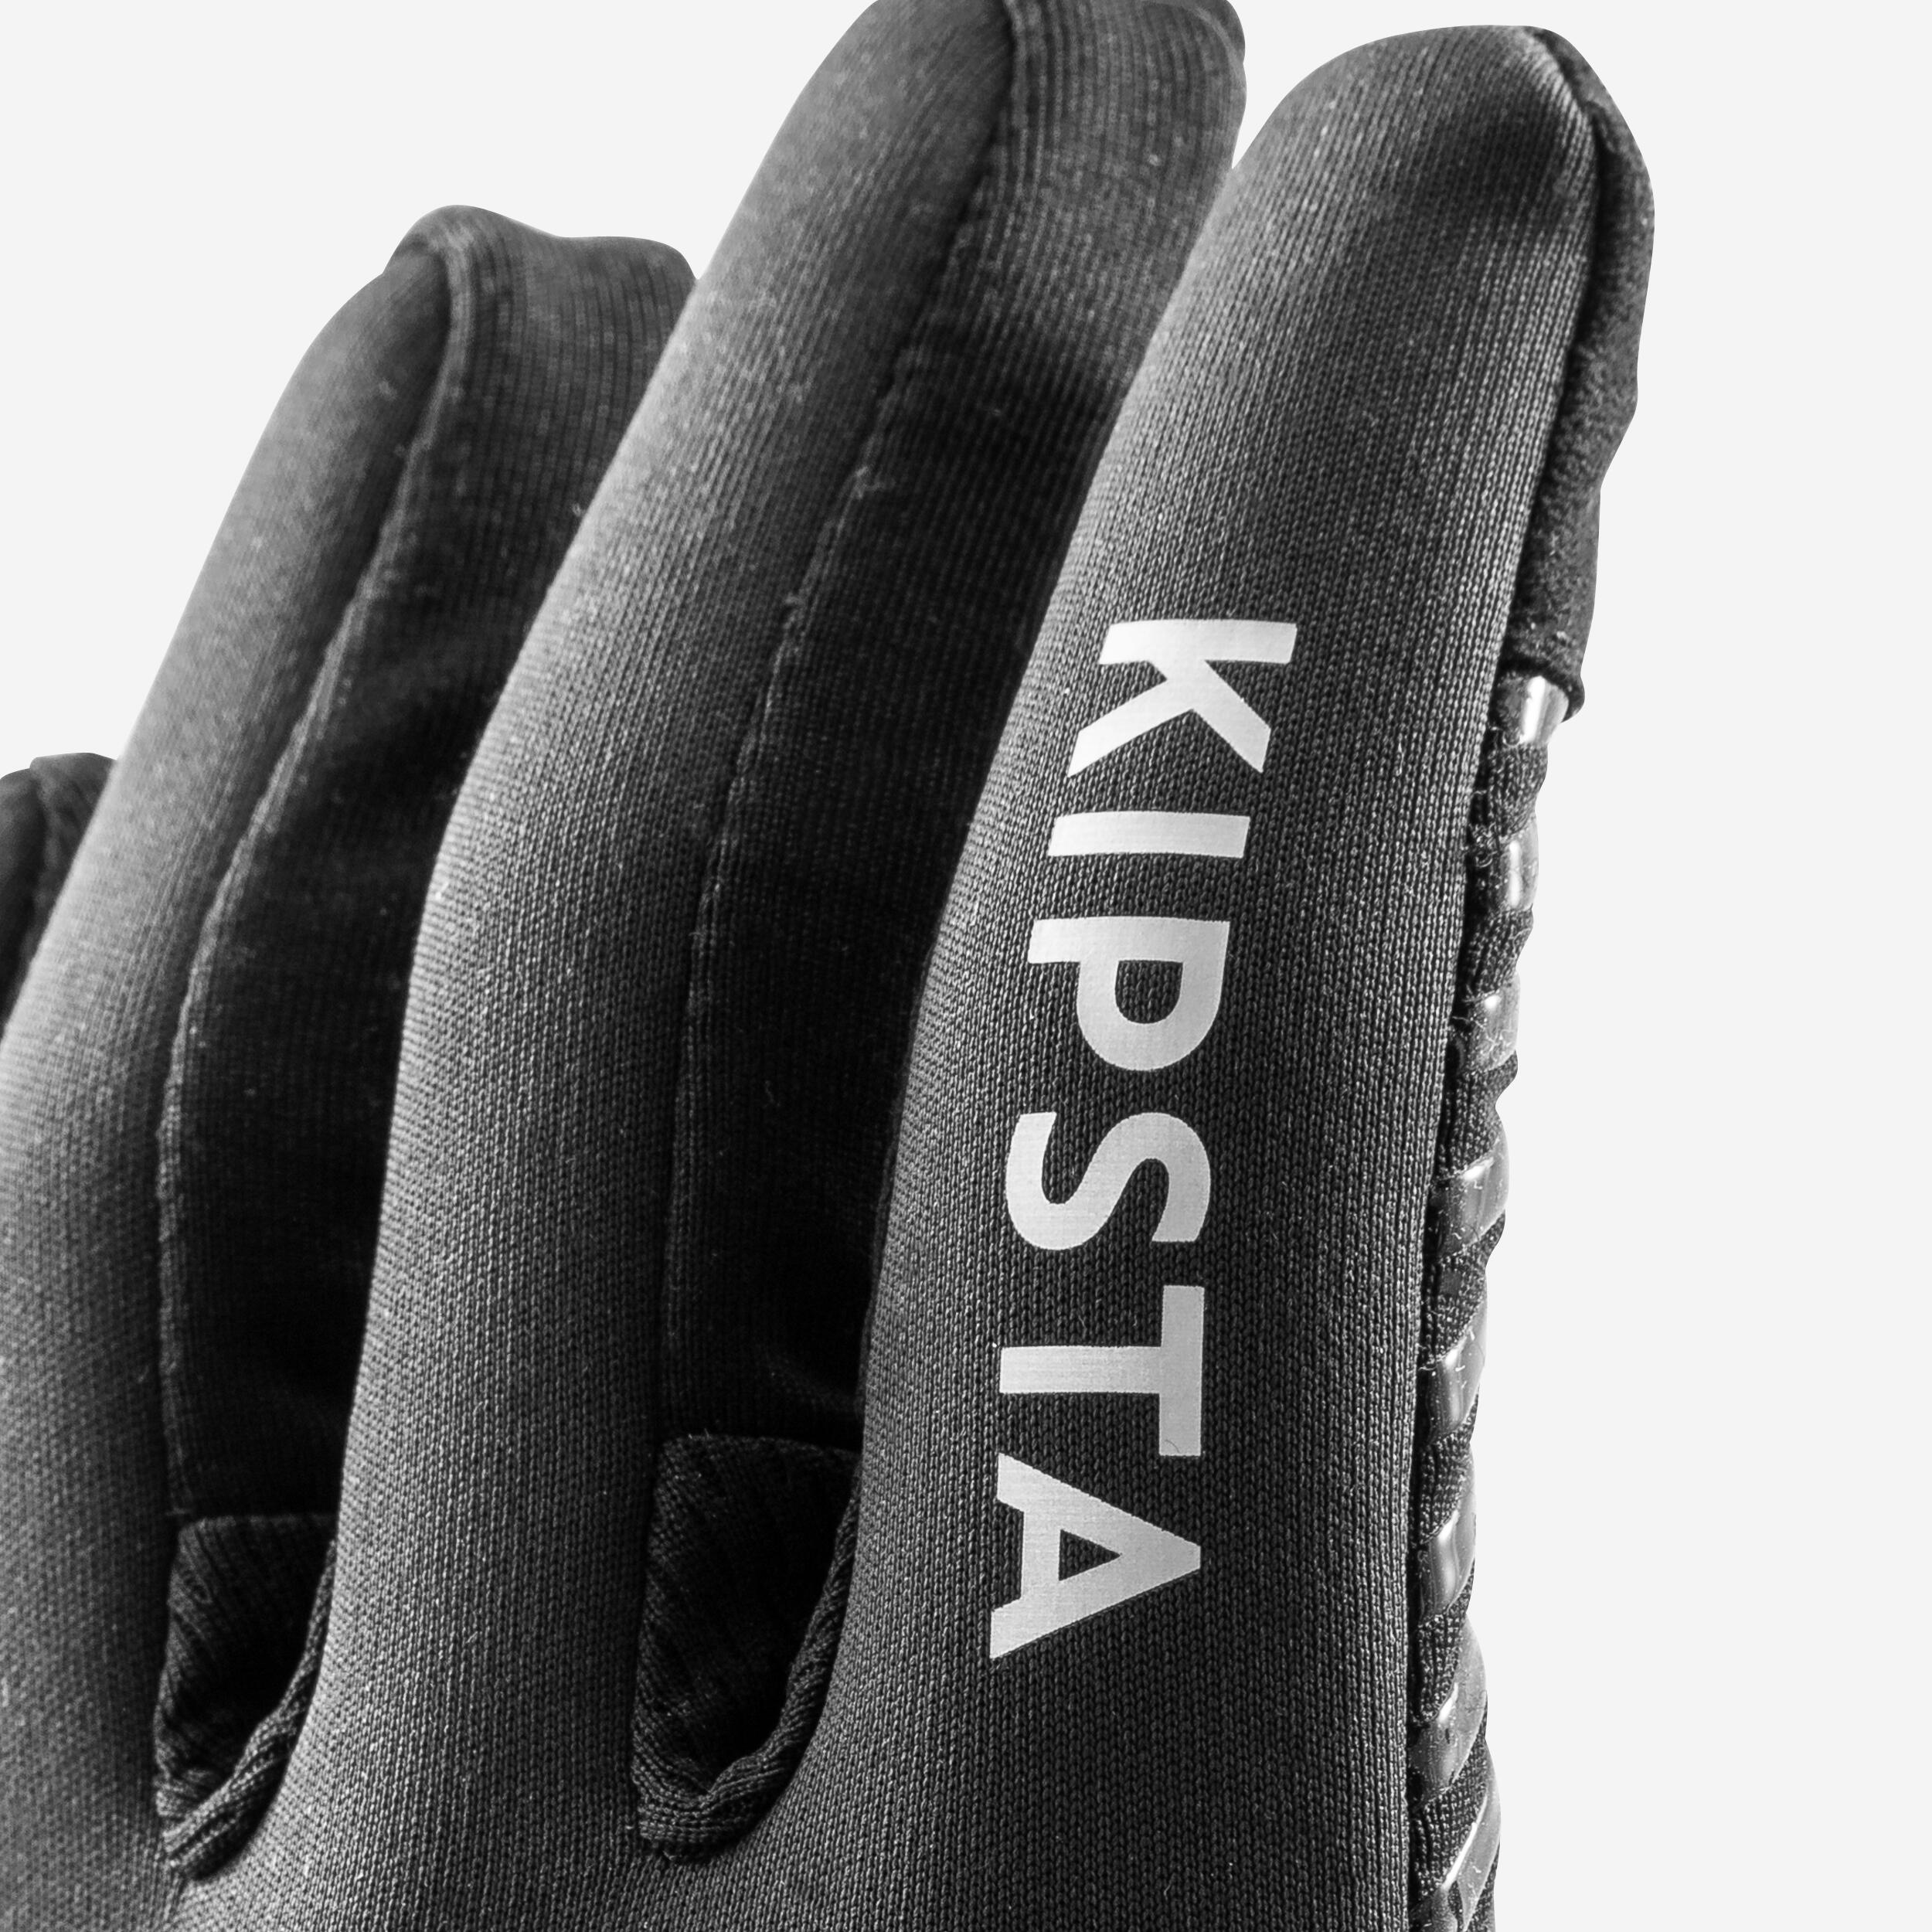 Kids' Thermal Tights Keepdry 500 - Black KIPSTA